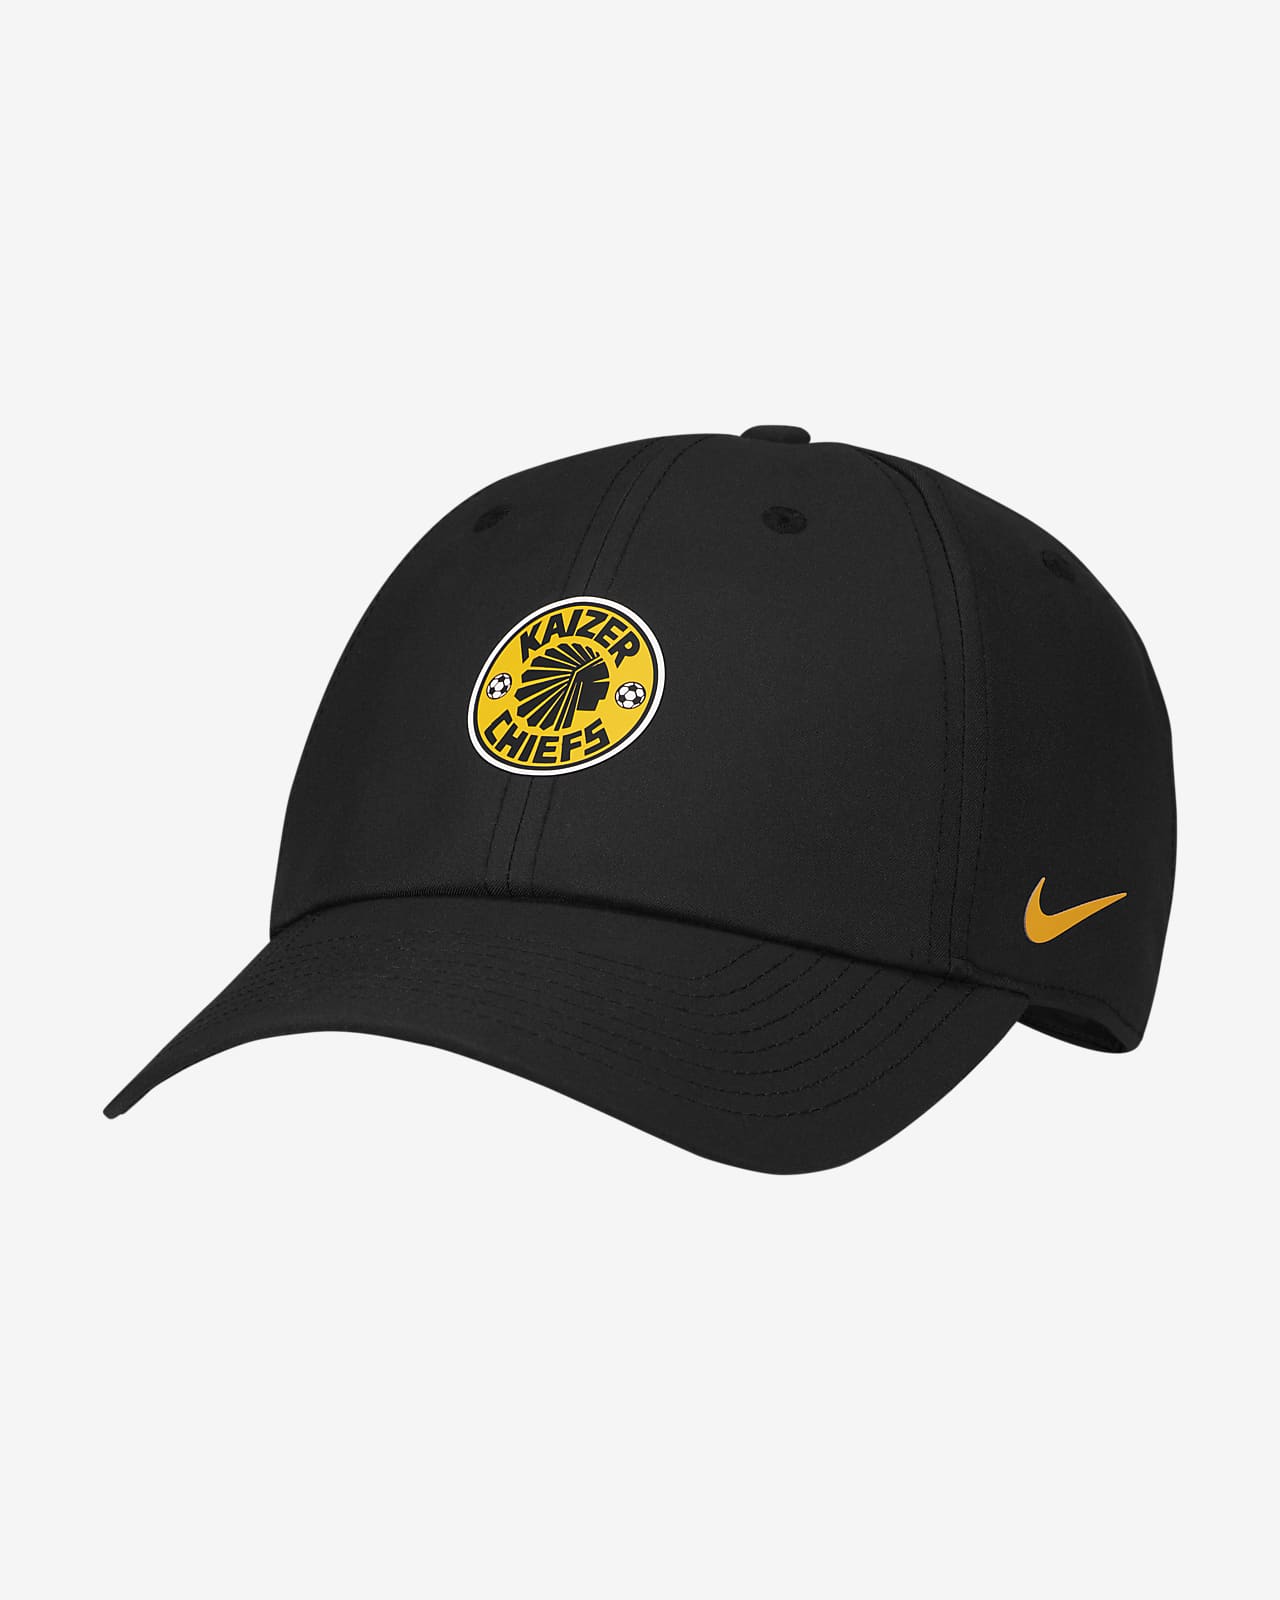 Kaizer Chiefs Heritage86 Nike Dri-FIT Adjustable Hat